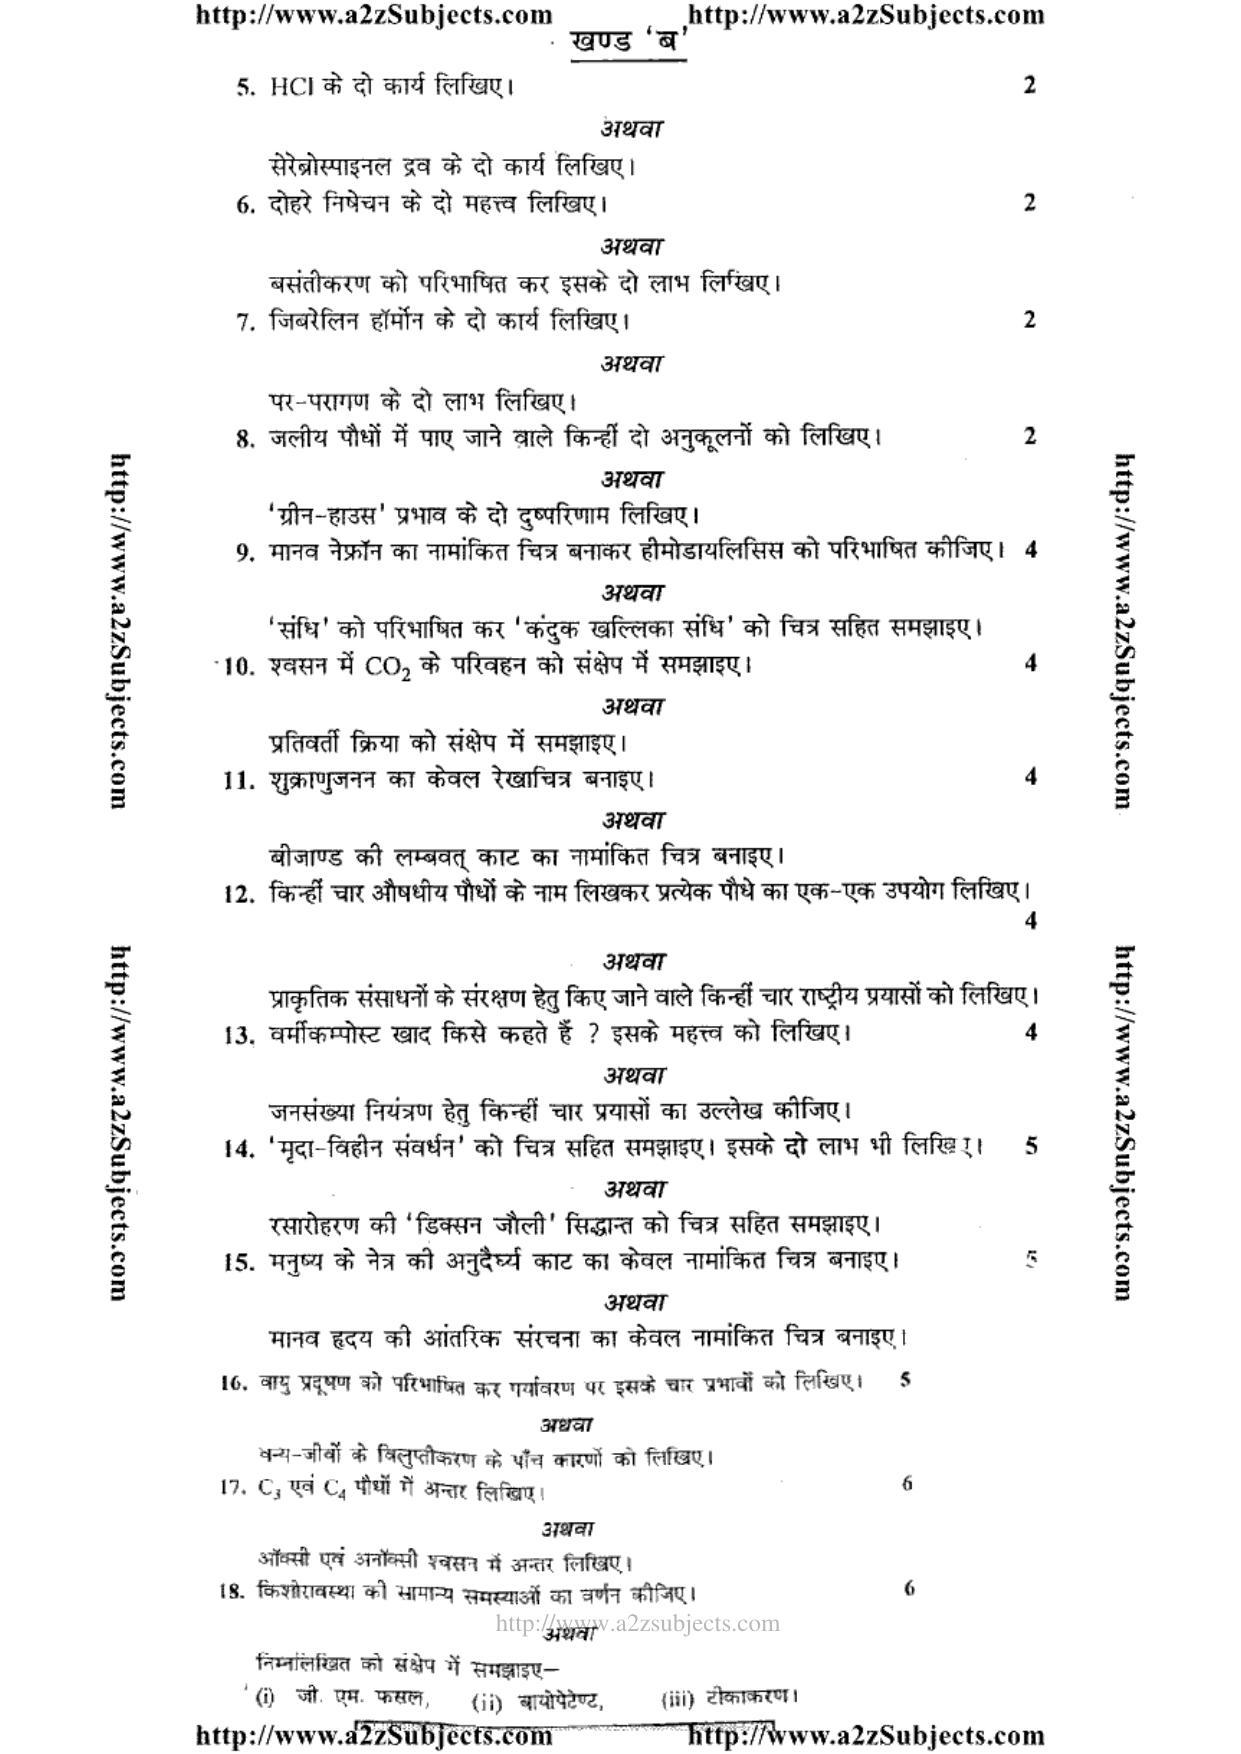 MP Board Class 12 Biology (Hindi Medium) 2014 Question Paper - Page 2